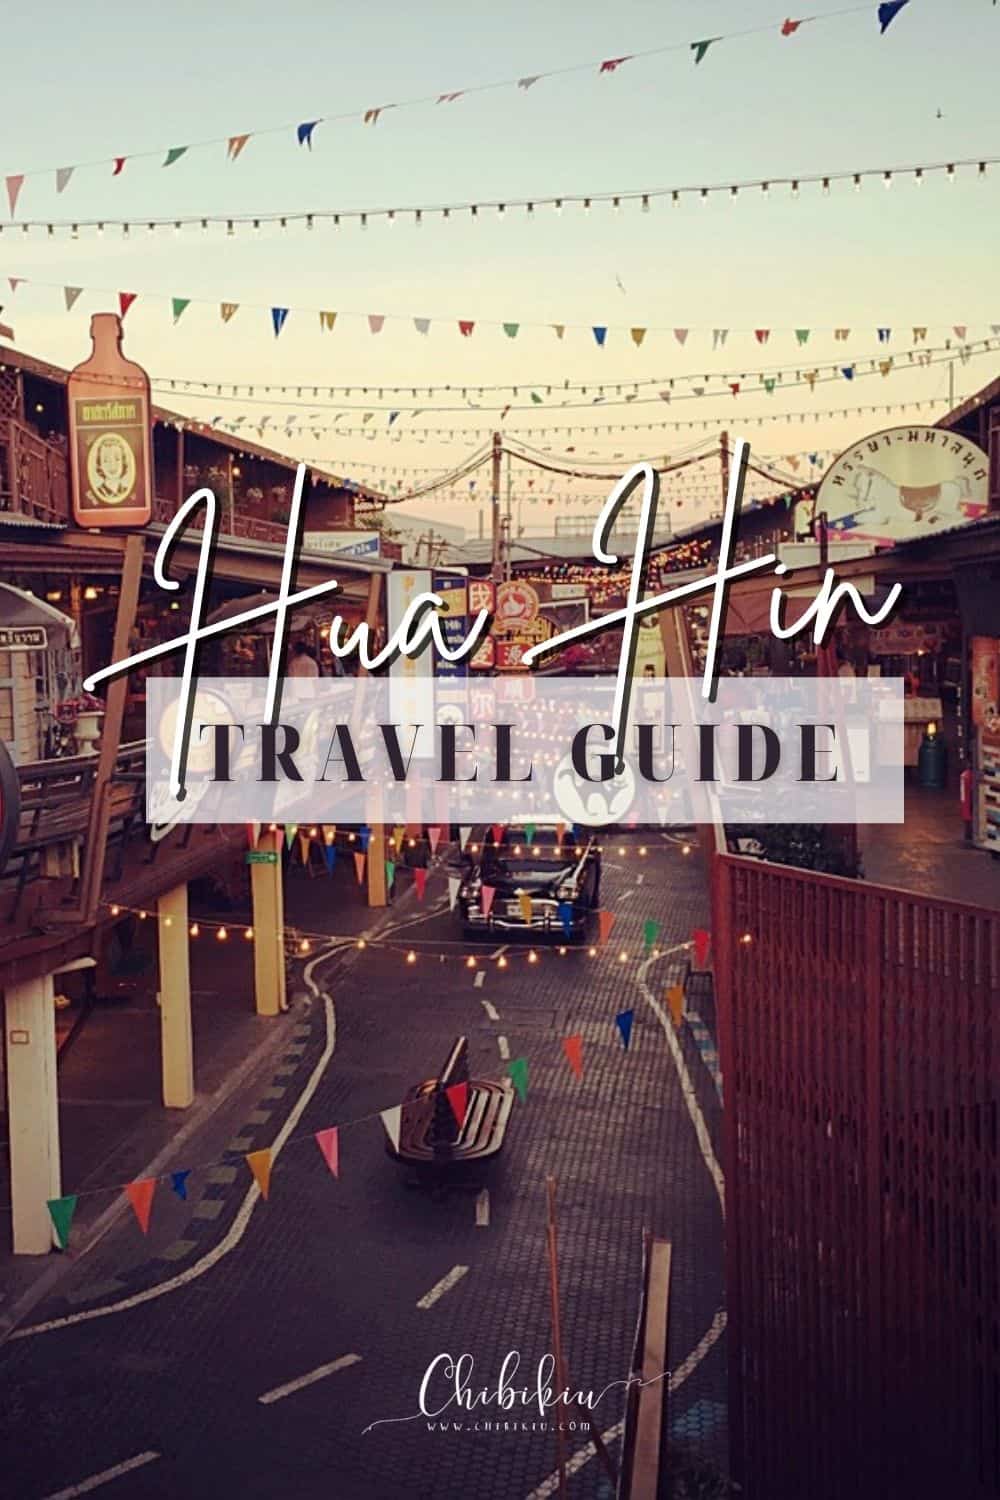 hua hin travel guide cover 